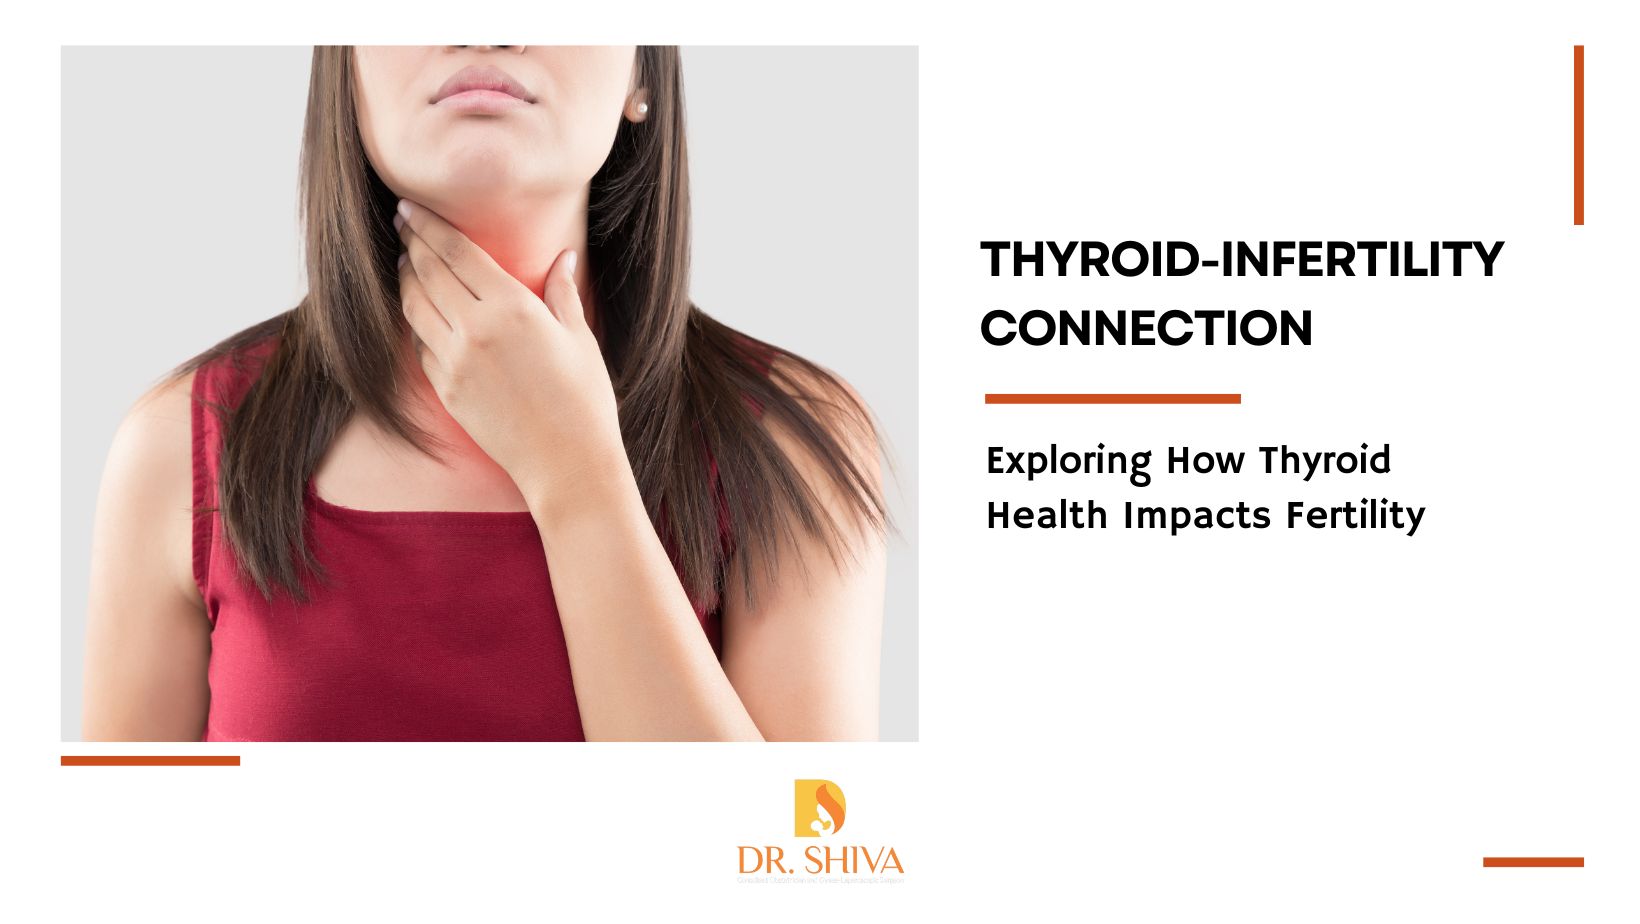 Thyroid-Infertility Connection: Exploring How Thyroid Health Impacts Fertility